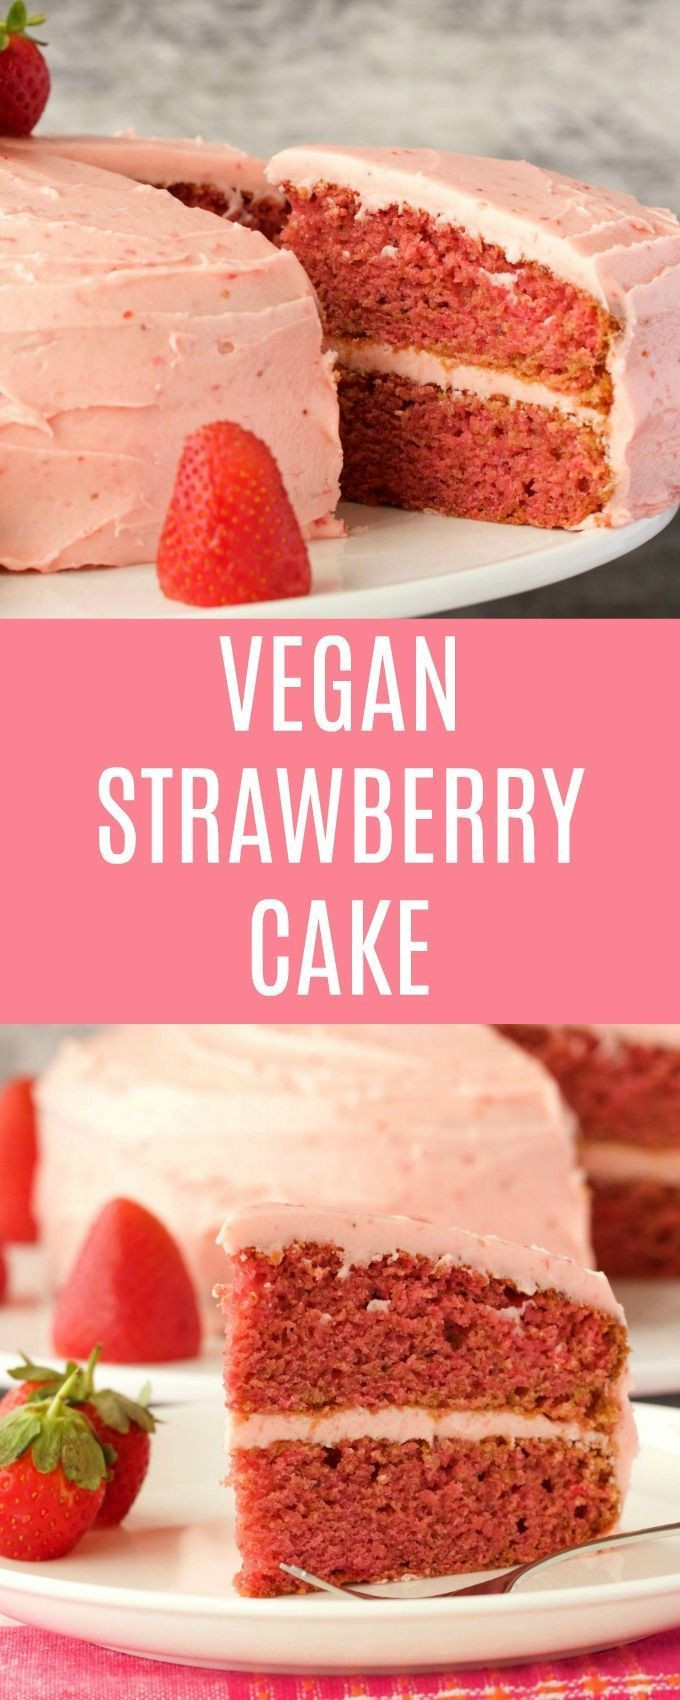 Vegan Strawberry Cake Recipe
 Light fluffy and deliciously moist vegan strawberry cake